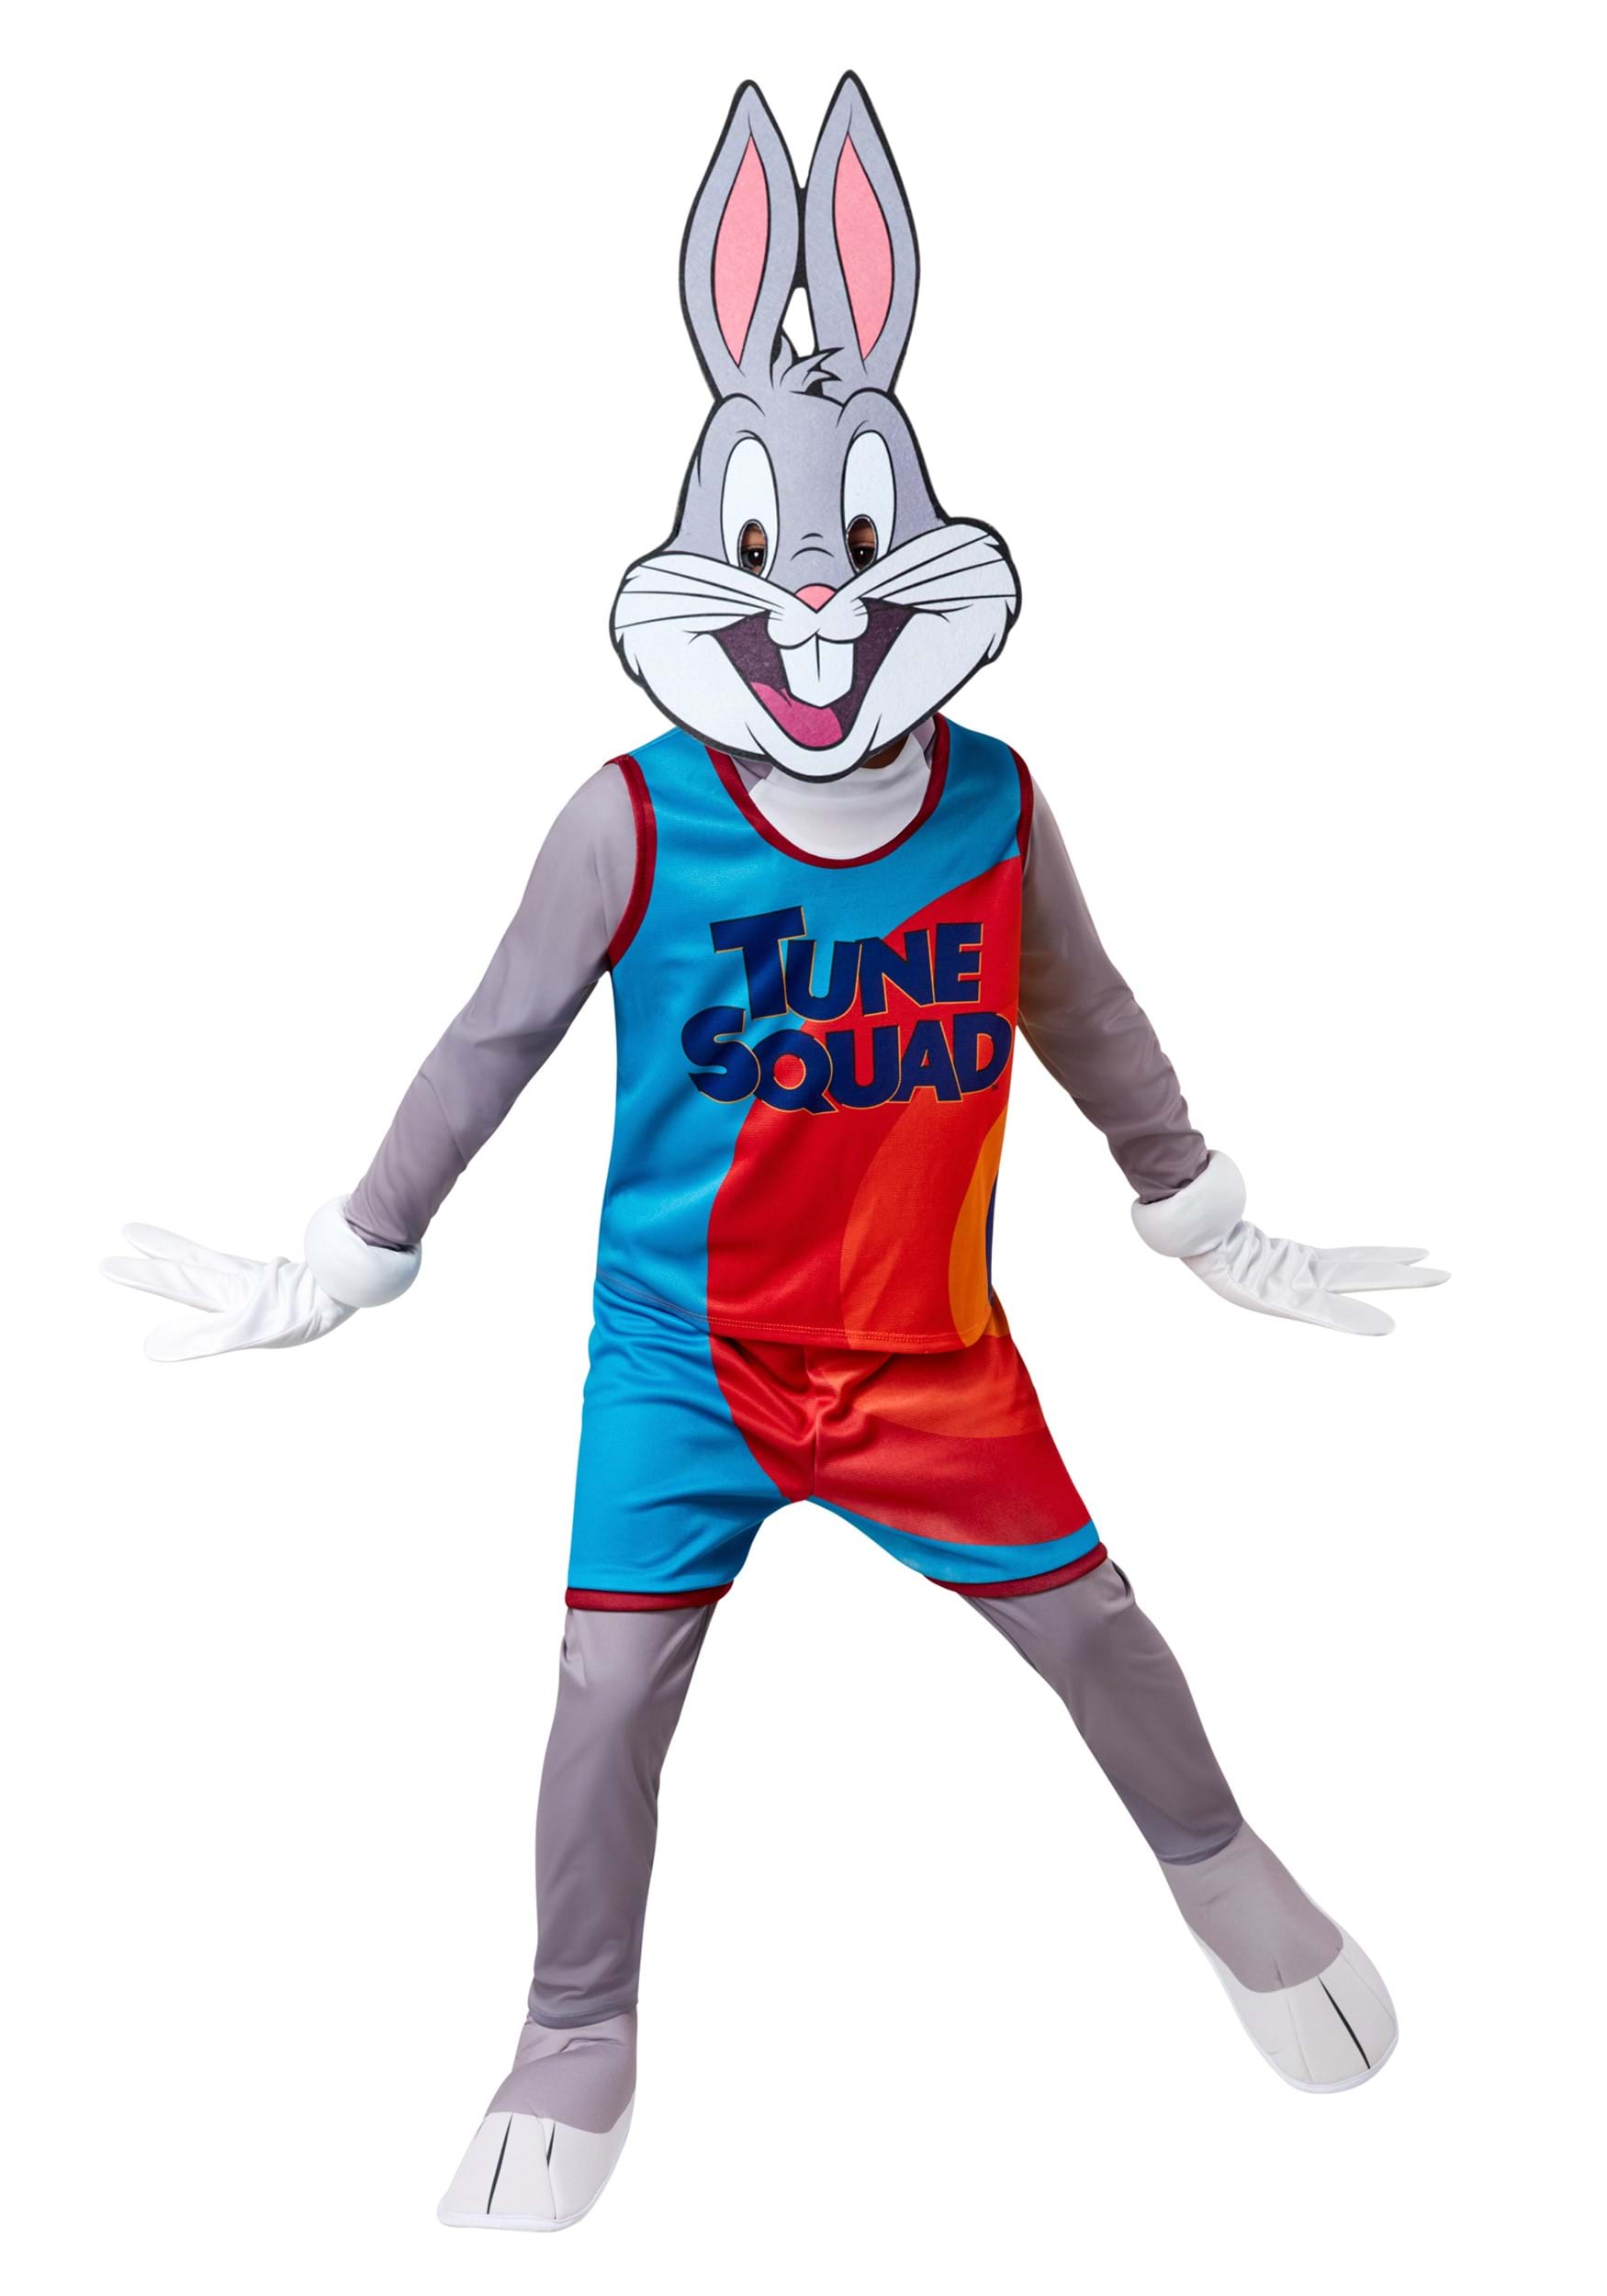 Space Jam 2 Bugs Bunny Tune Squad Child Fancy Dress Costume